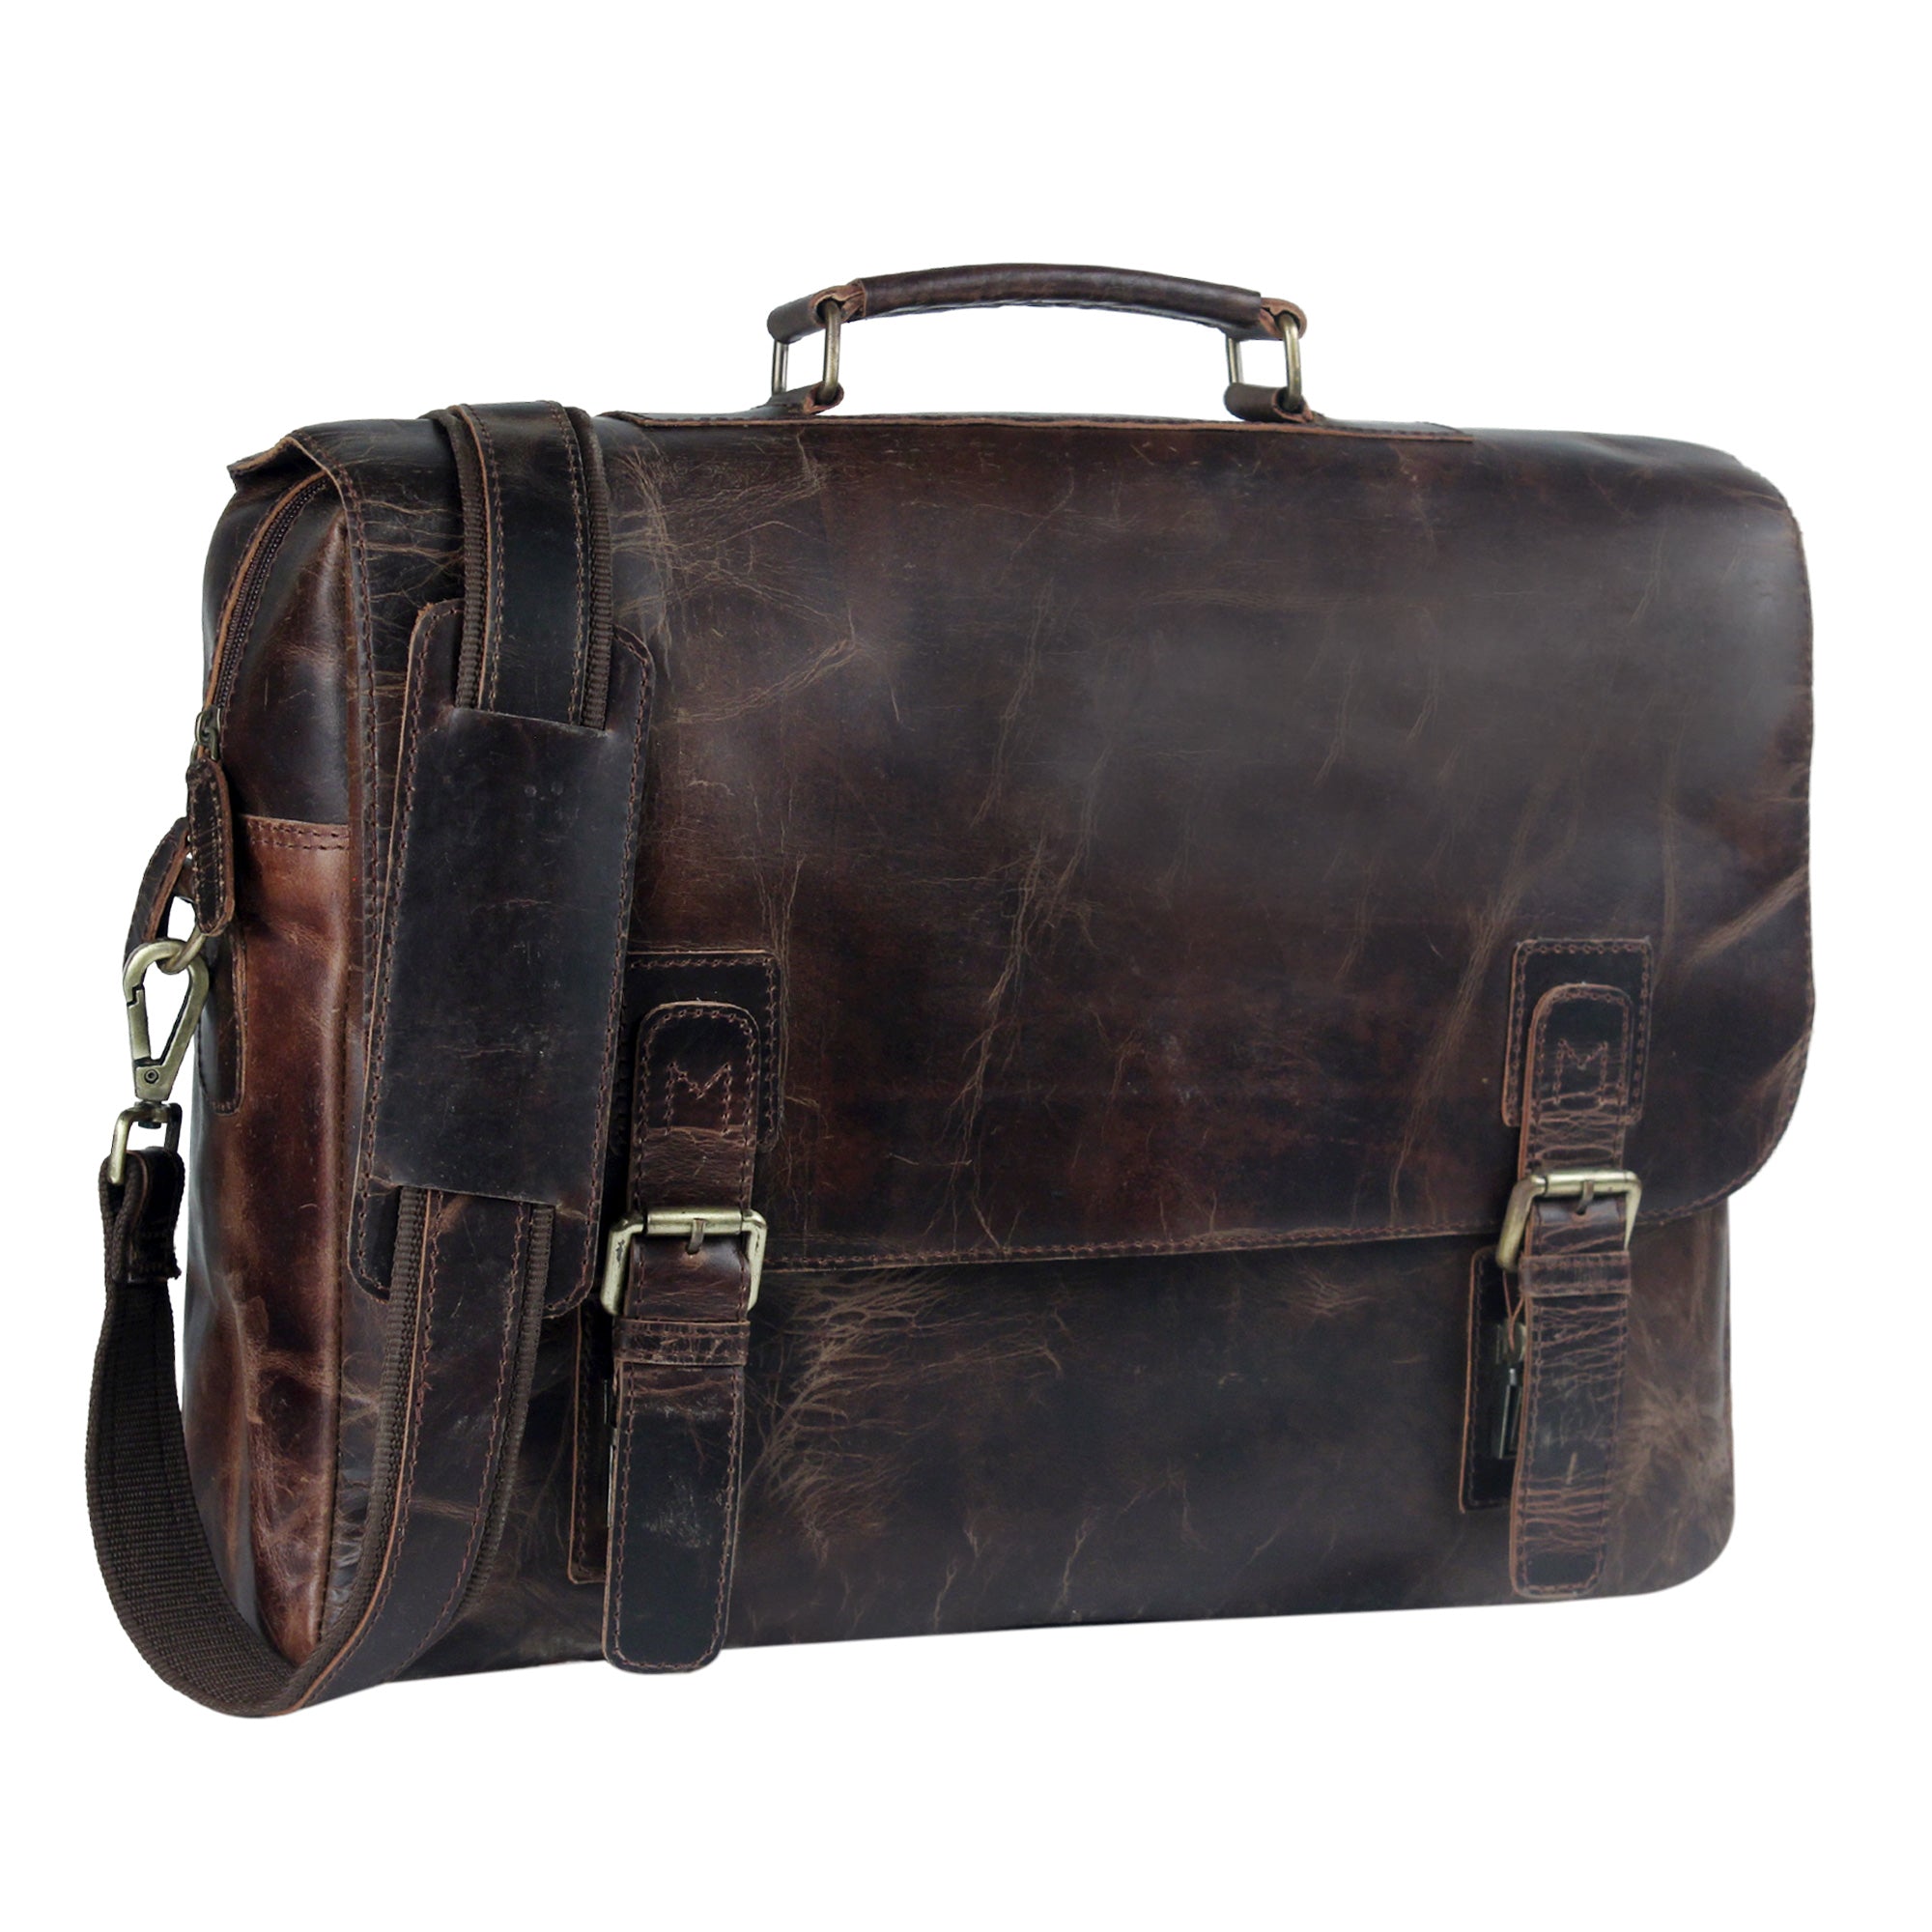 classis look 100% full grain leather messanger bag